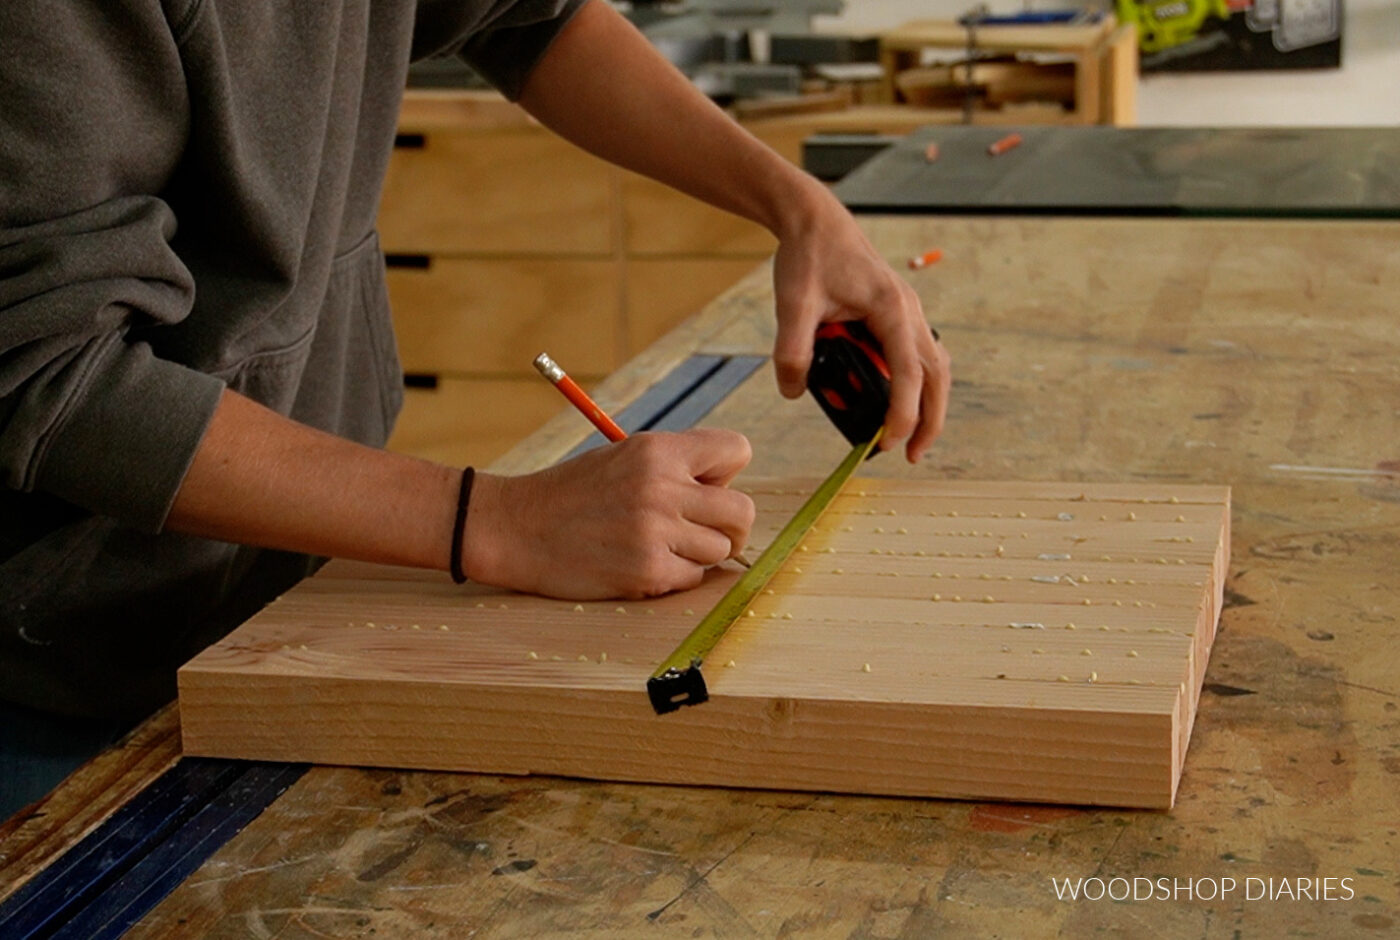 DIY Plywood Closet Organizer Build Plans - Houseful of Handmade